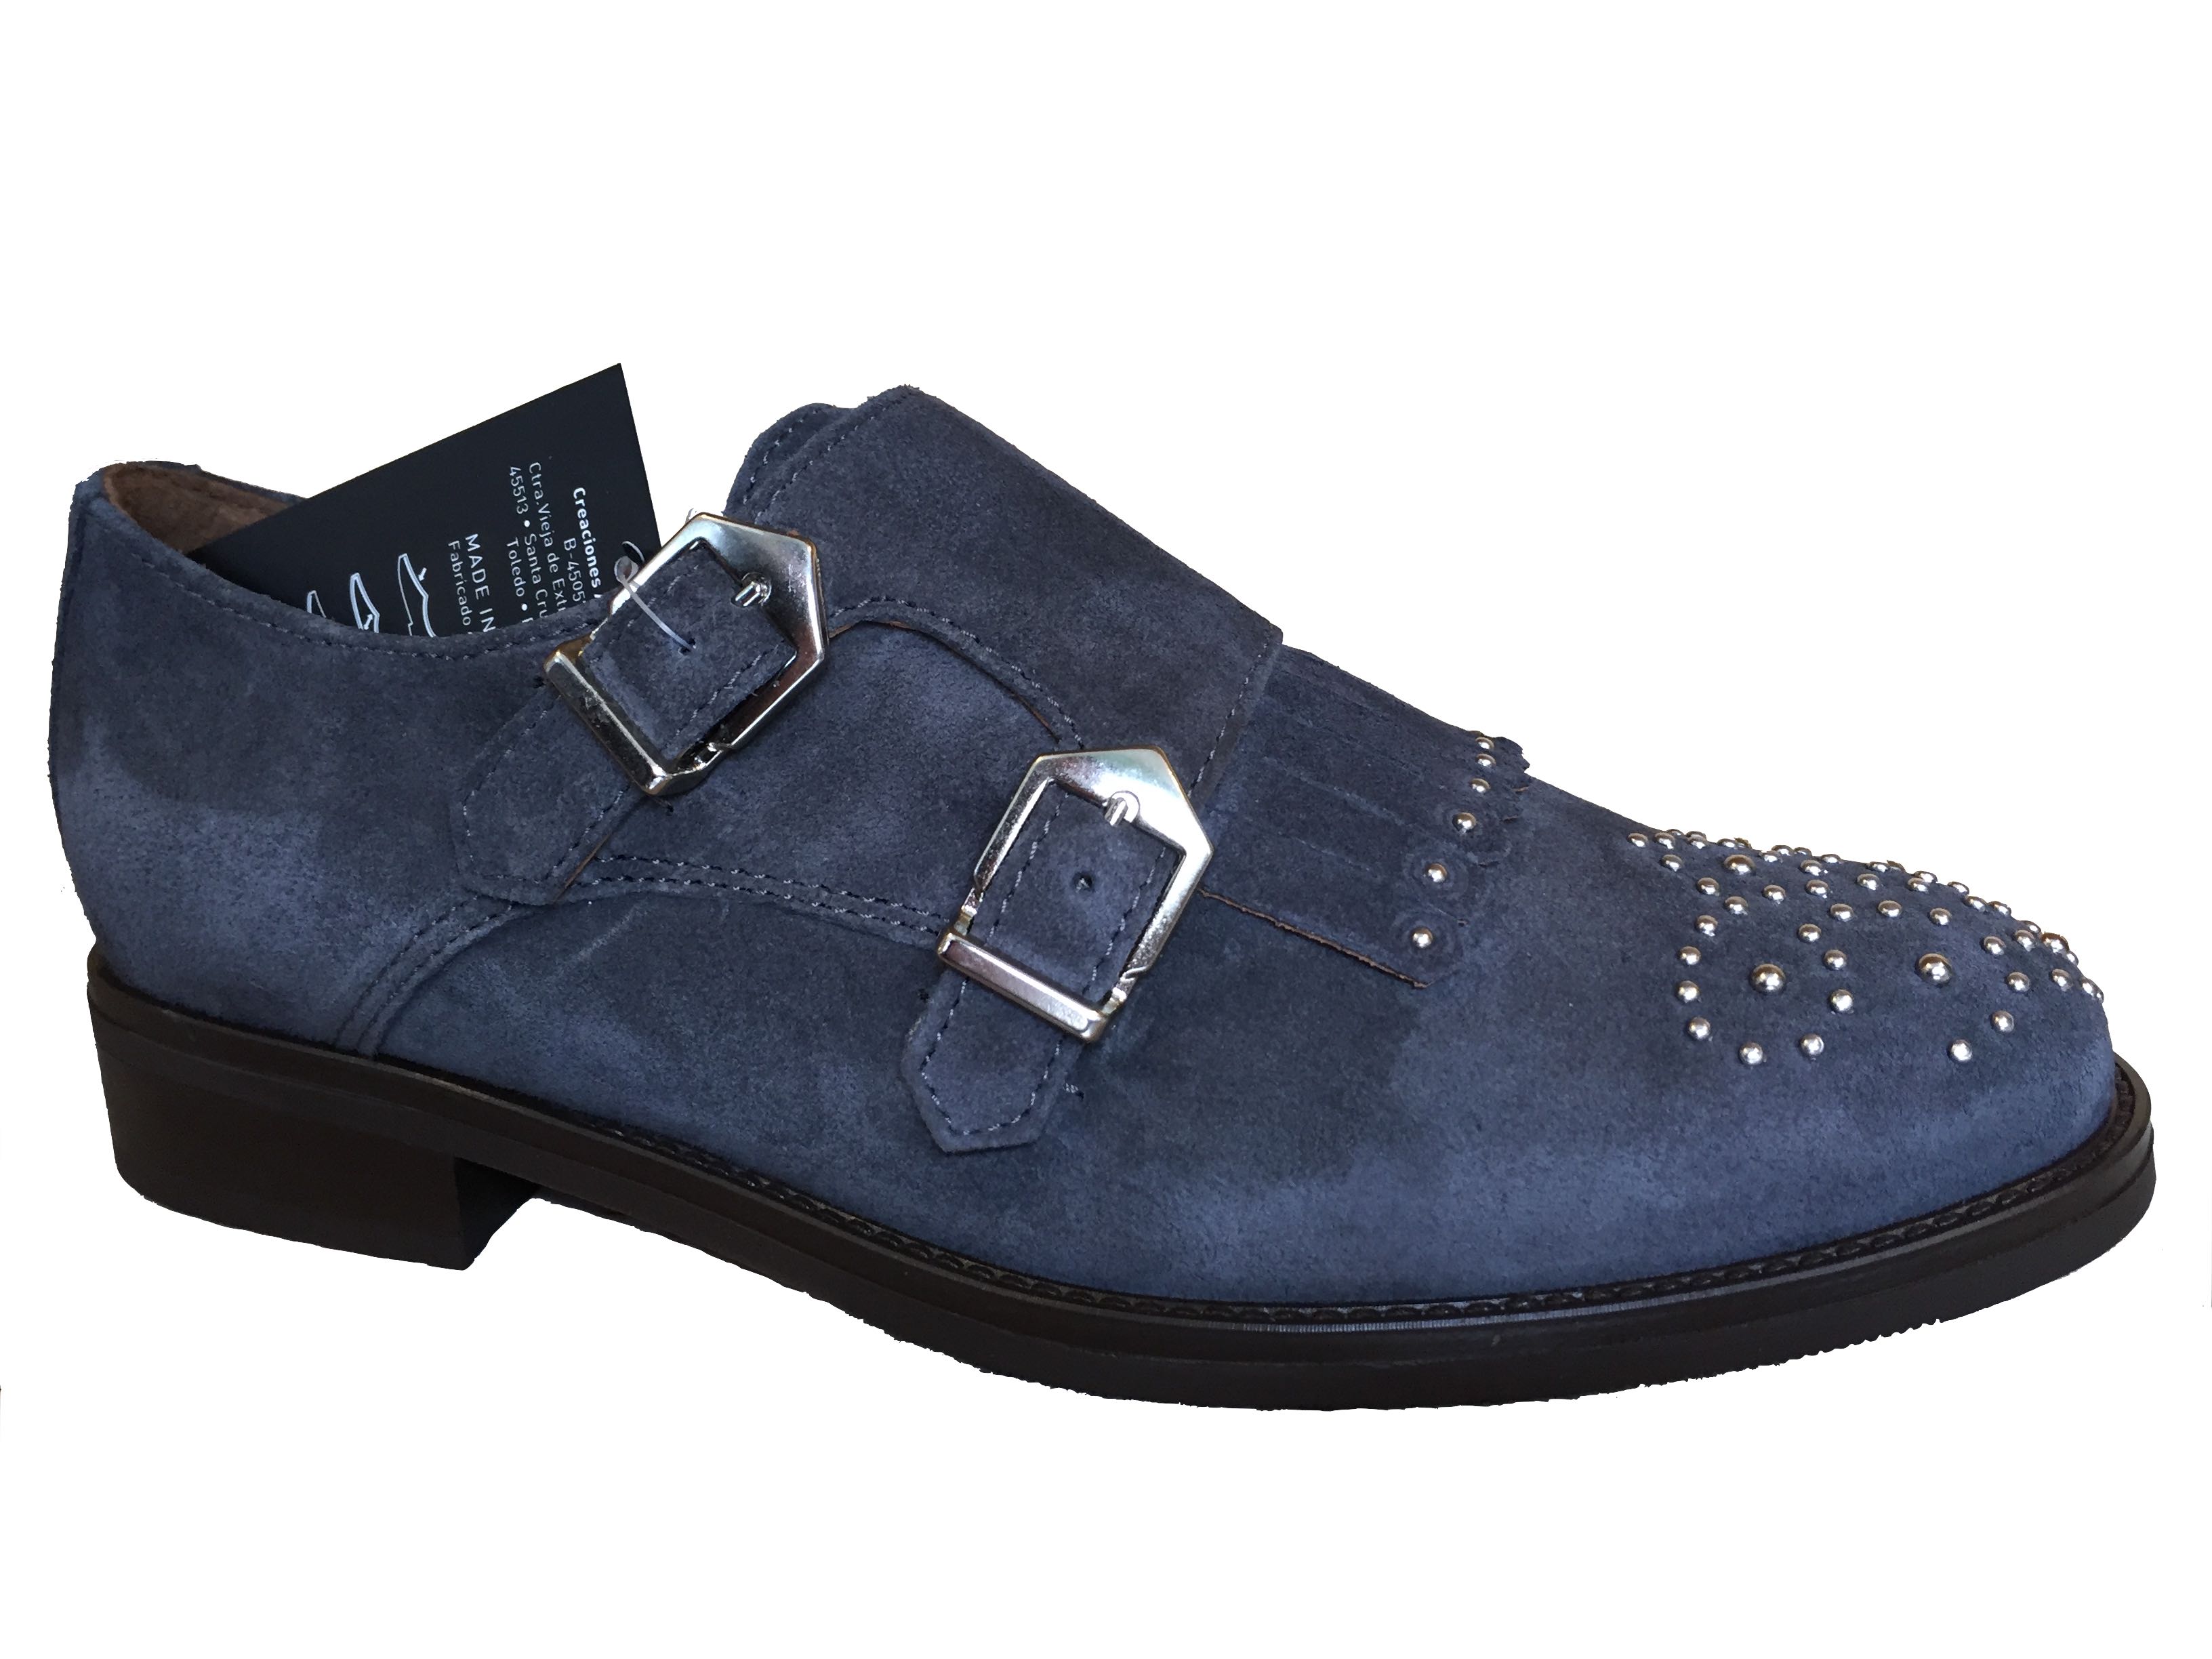 Alpe 31551146 Double Monk Strap Asphalt Grey Suede Shoes - elevate your sole